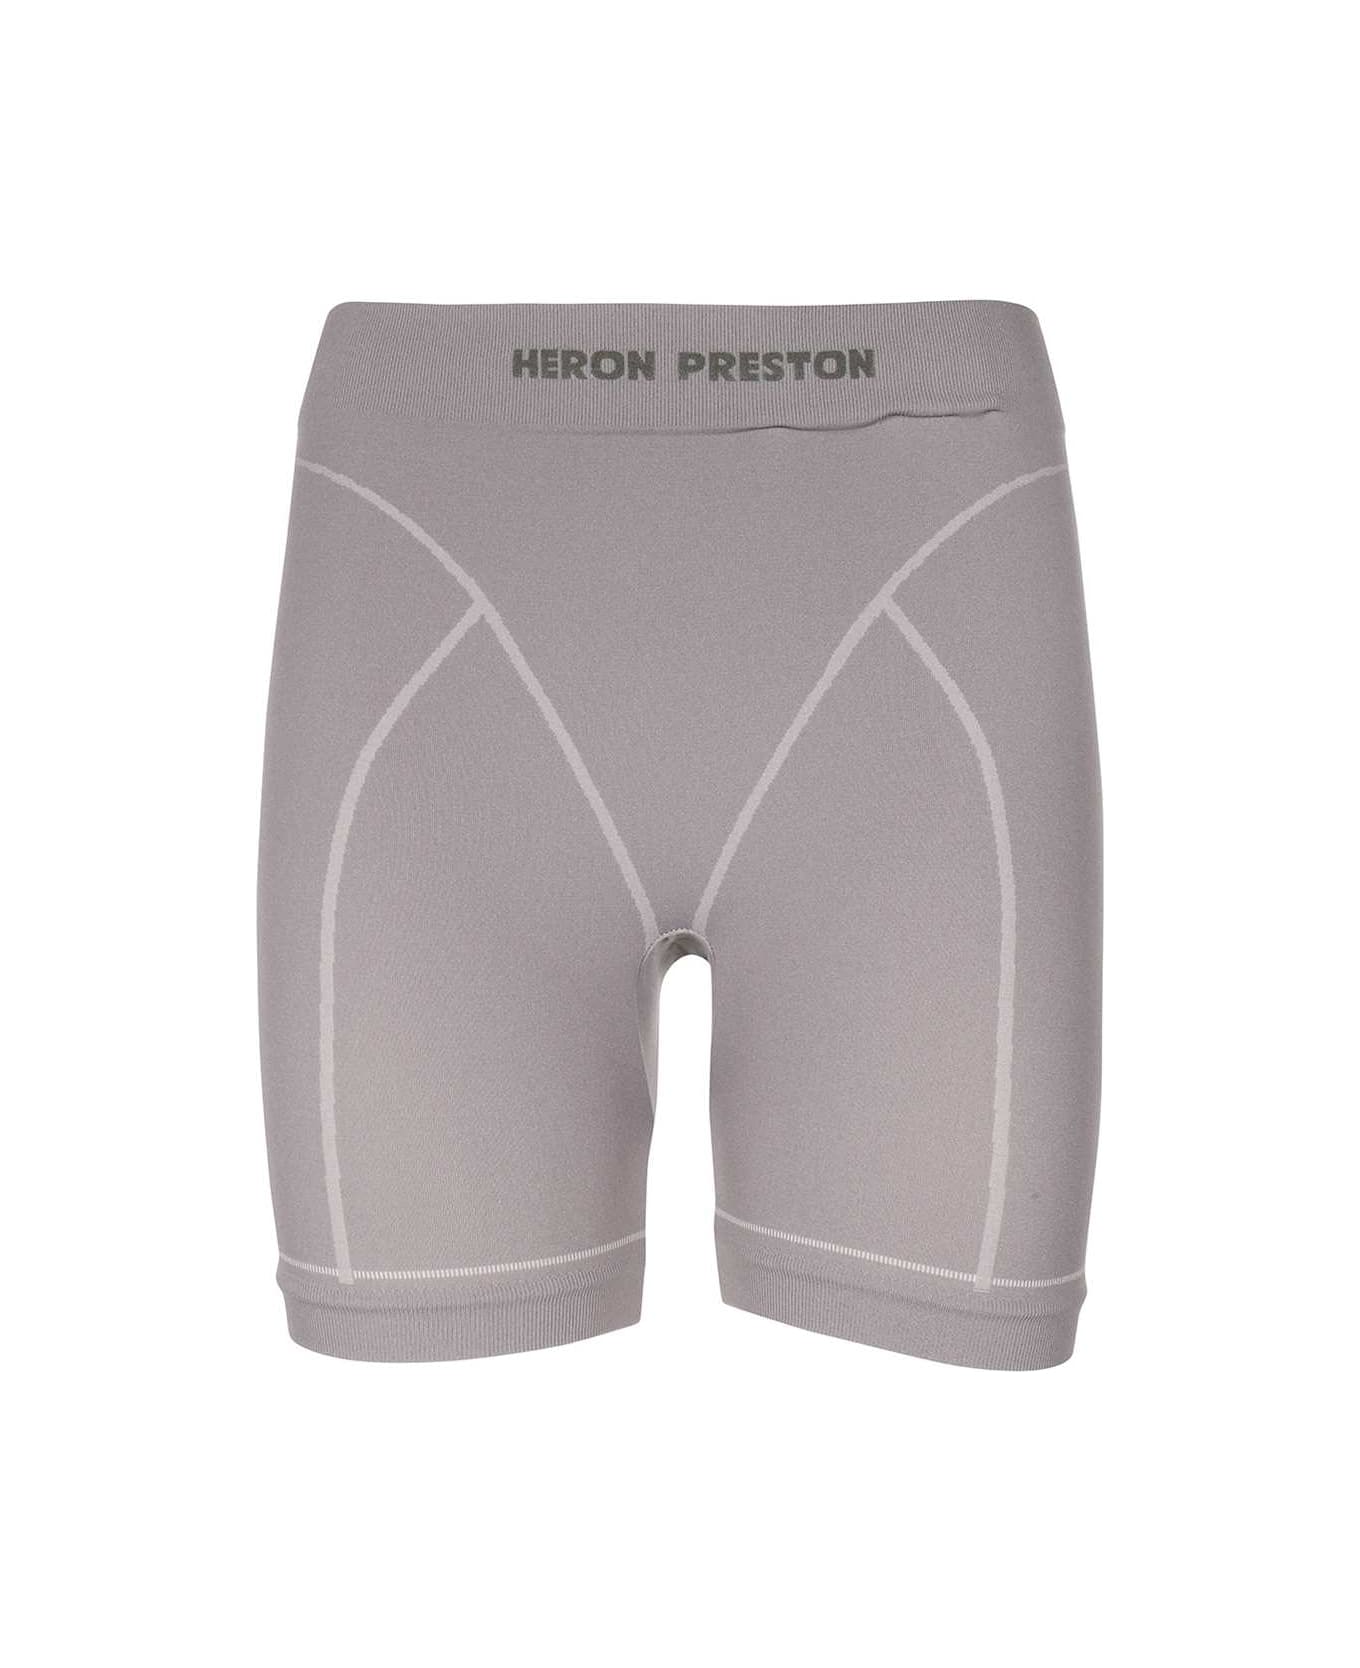 HERON PRESTON Nylon Shorts - grey ショーツ